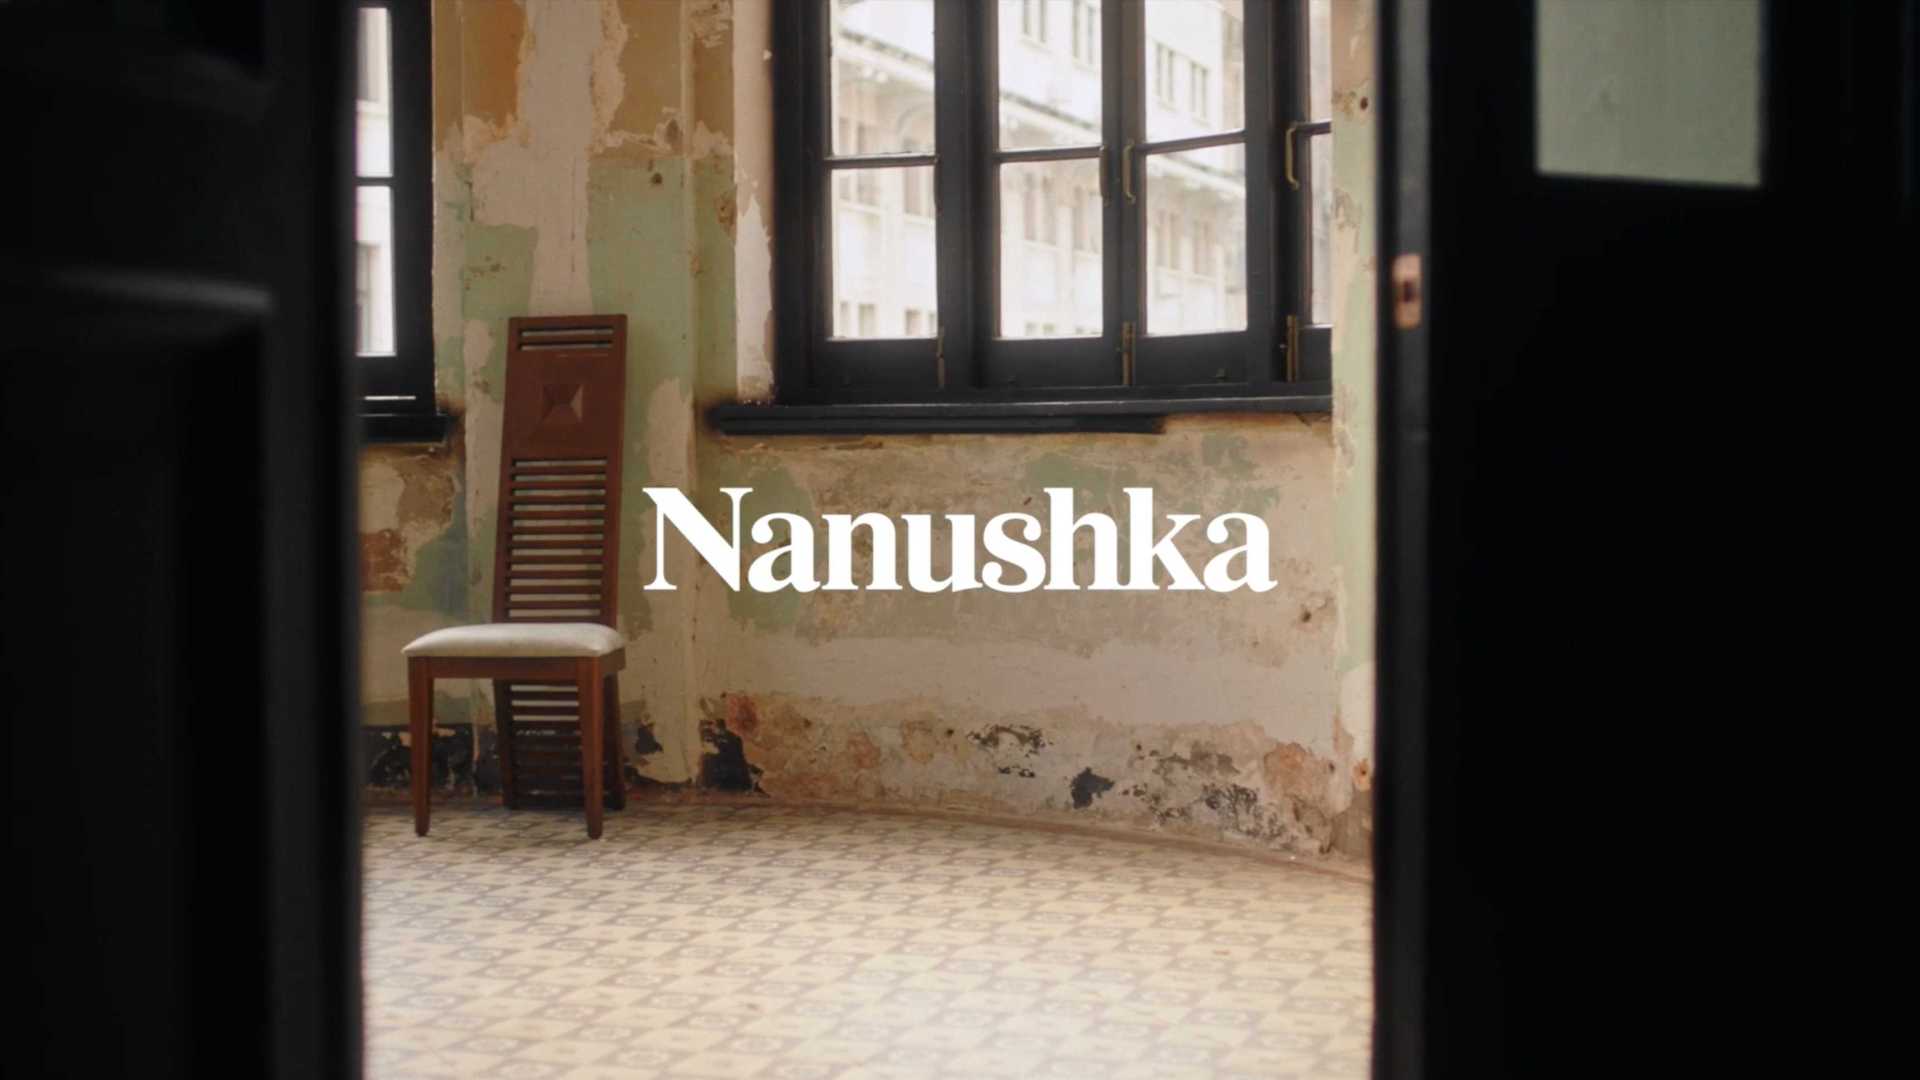 NANUSHKA China Launch Campaign